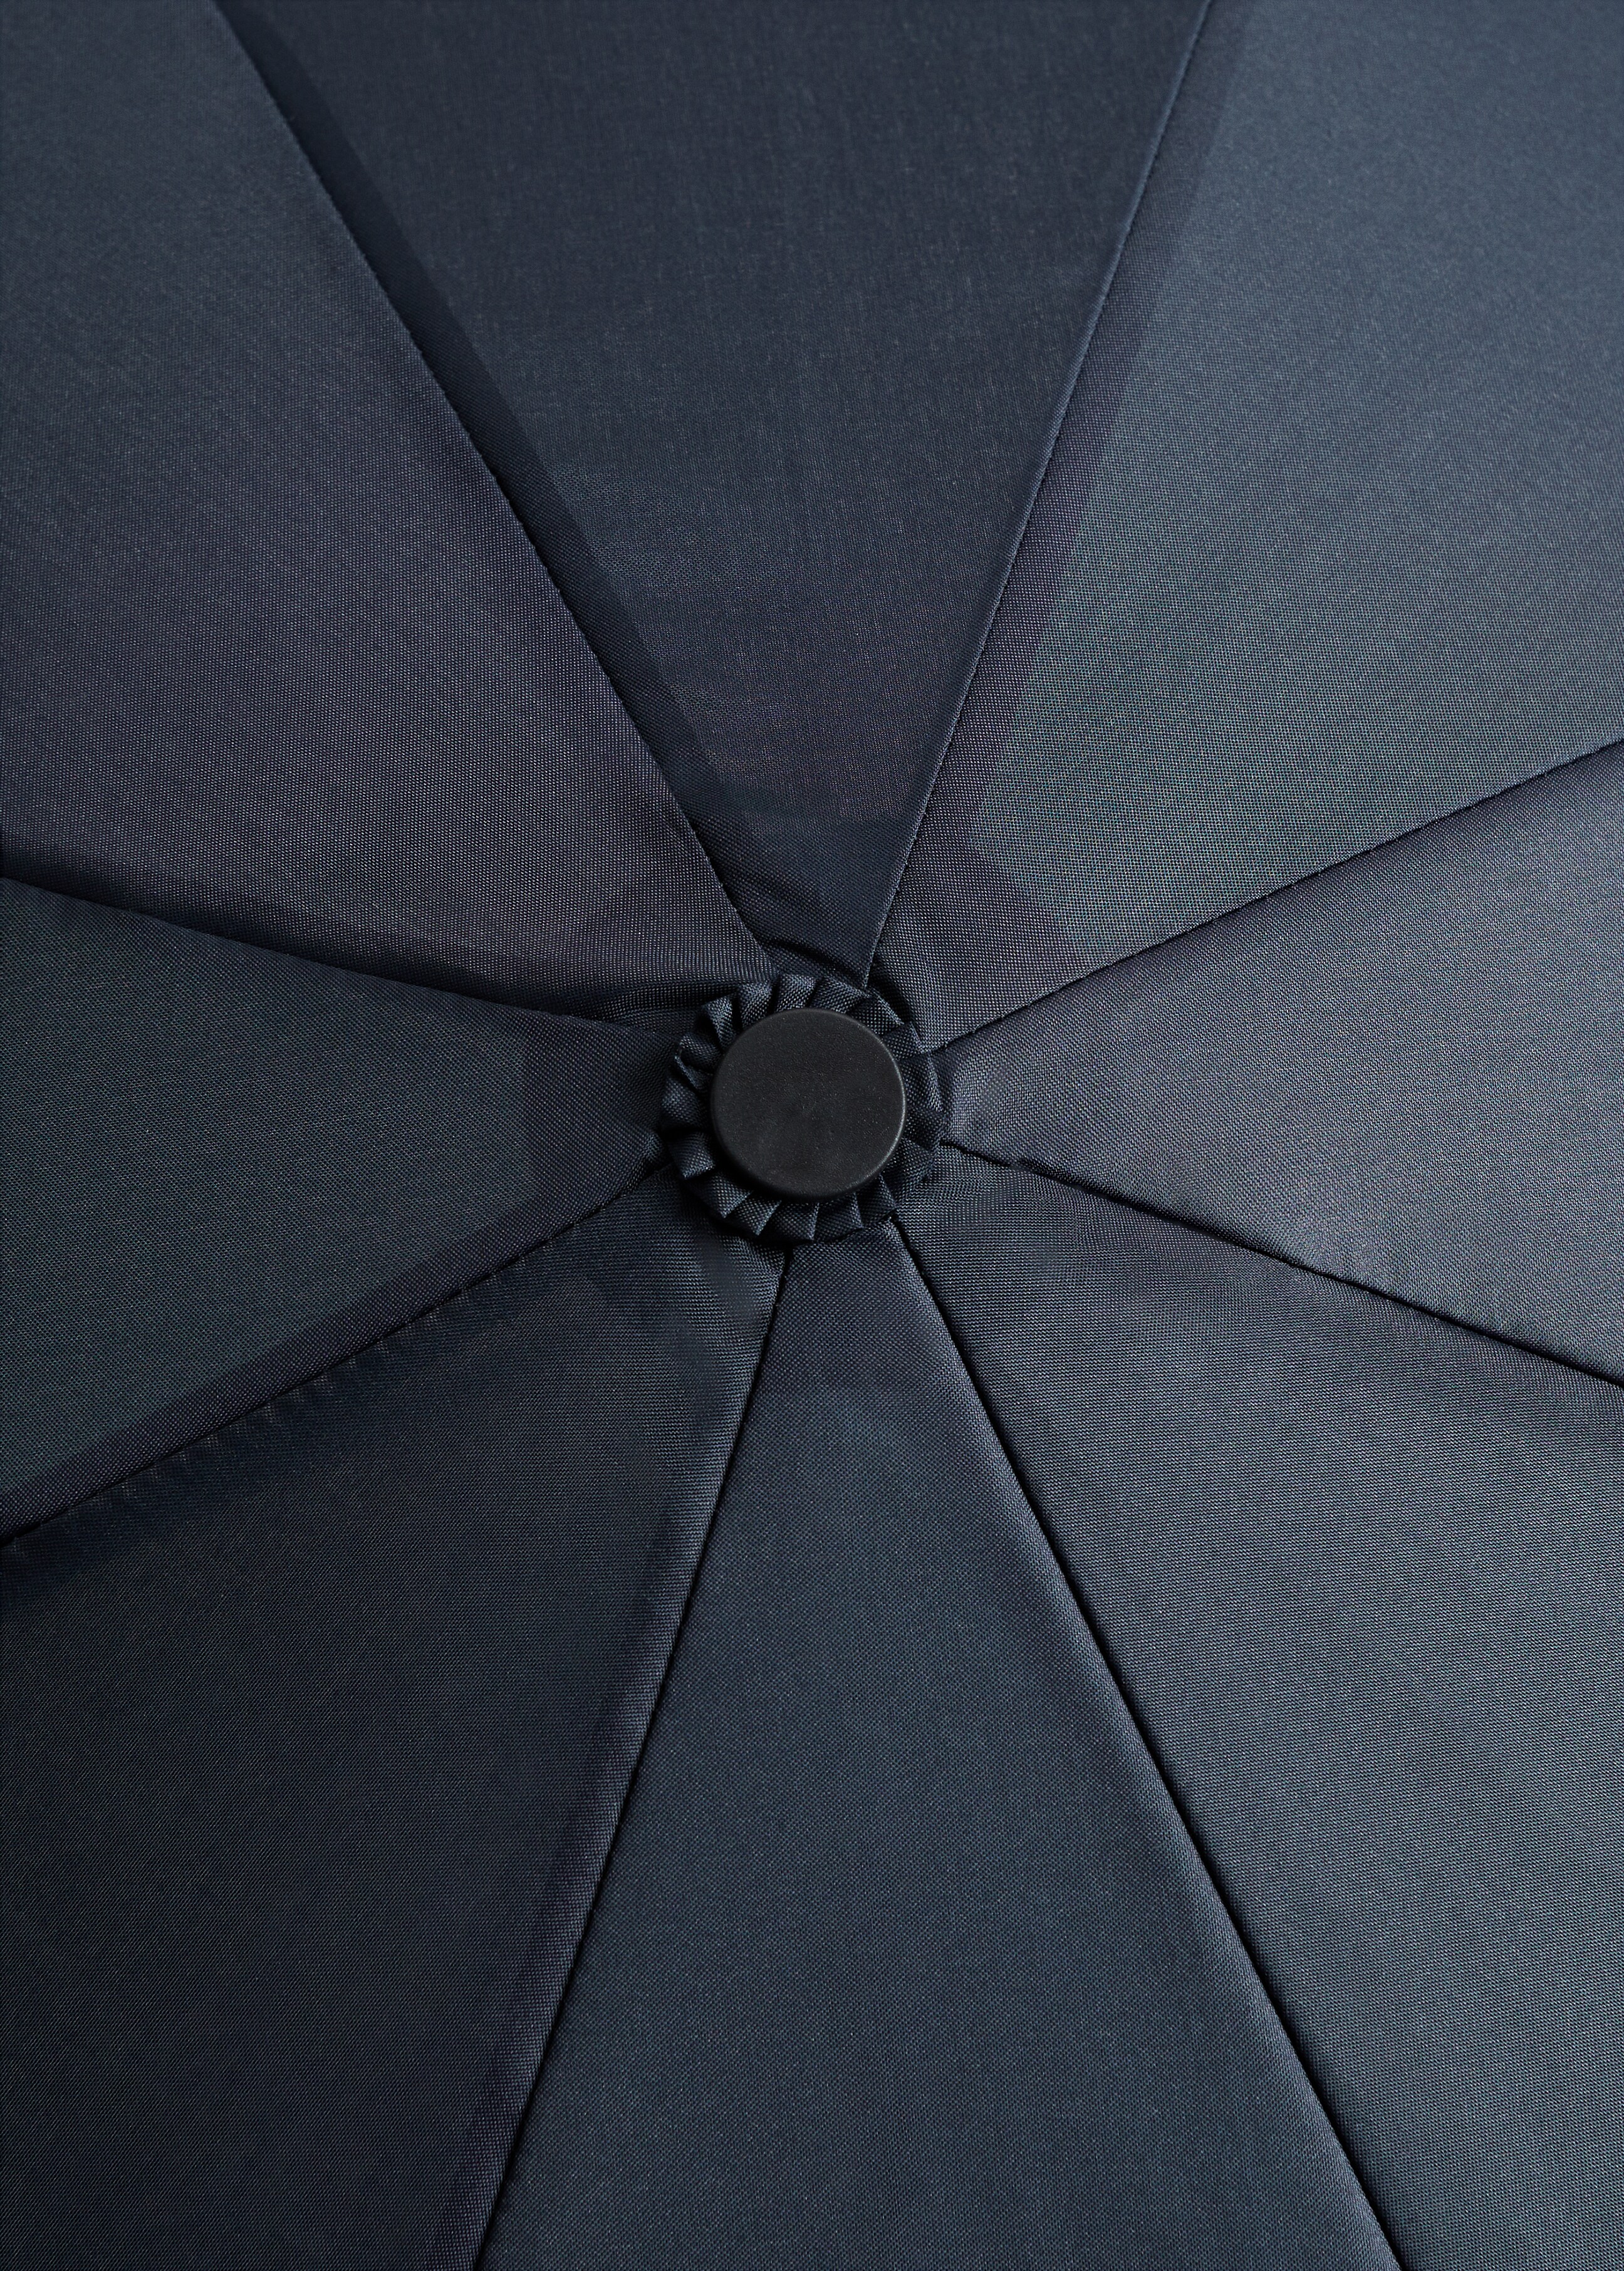 Plain folding umbrella - Details of the article 3